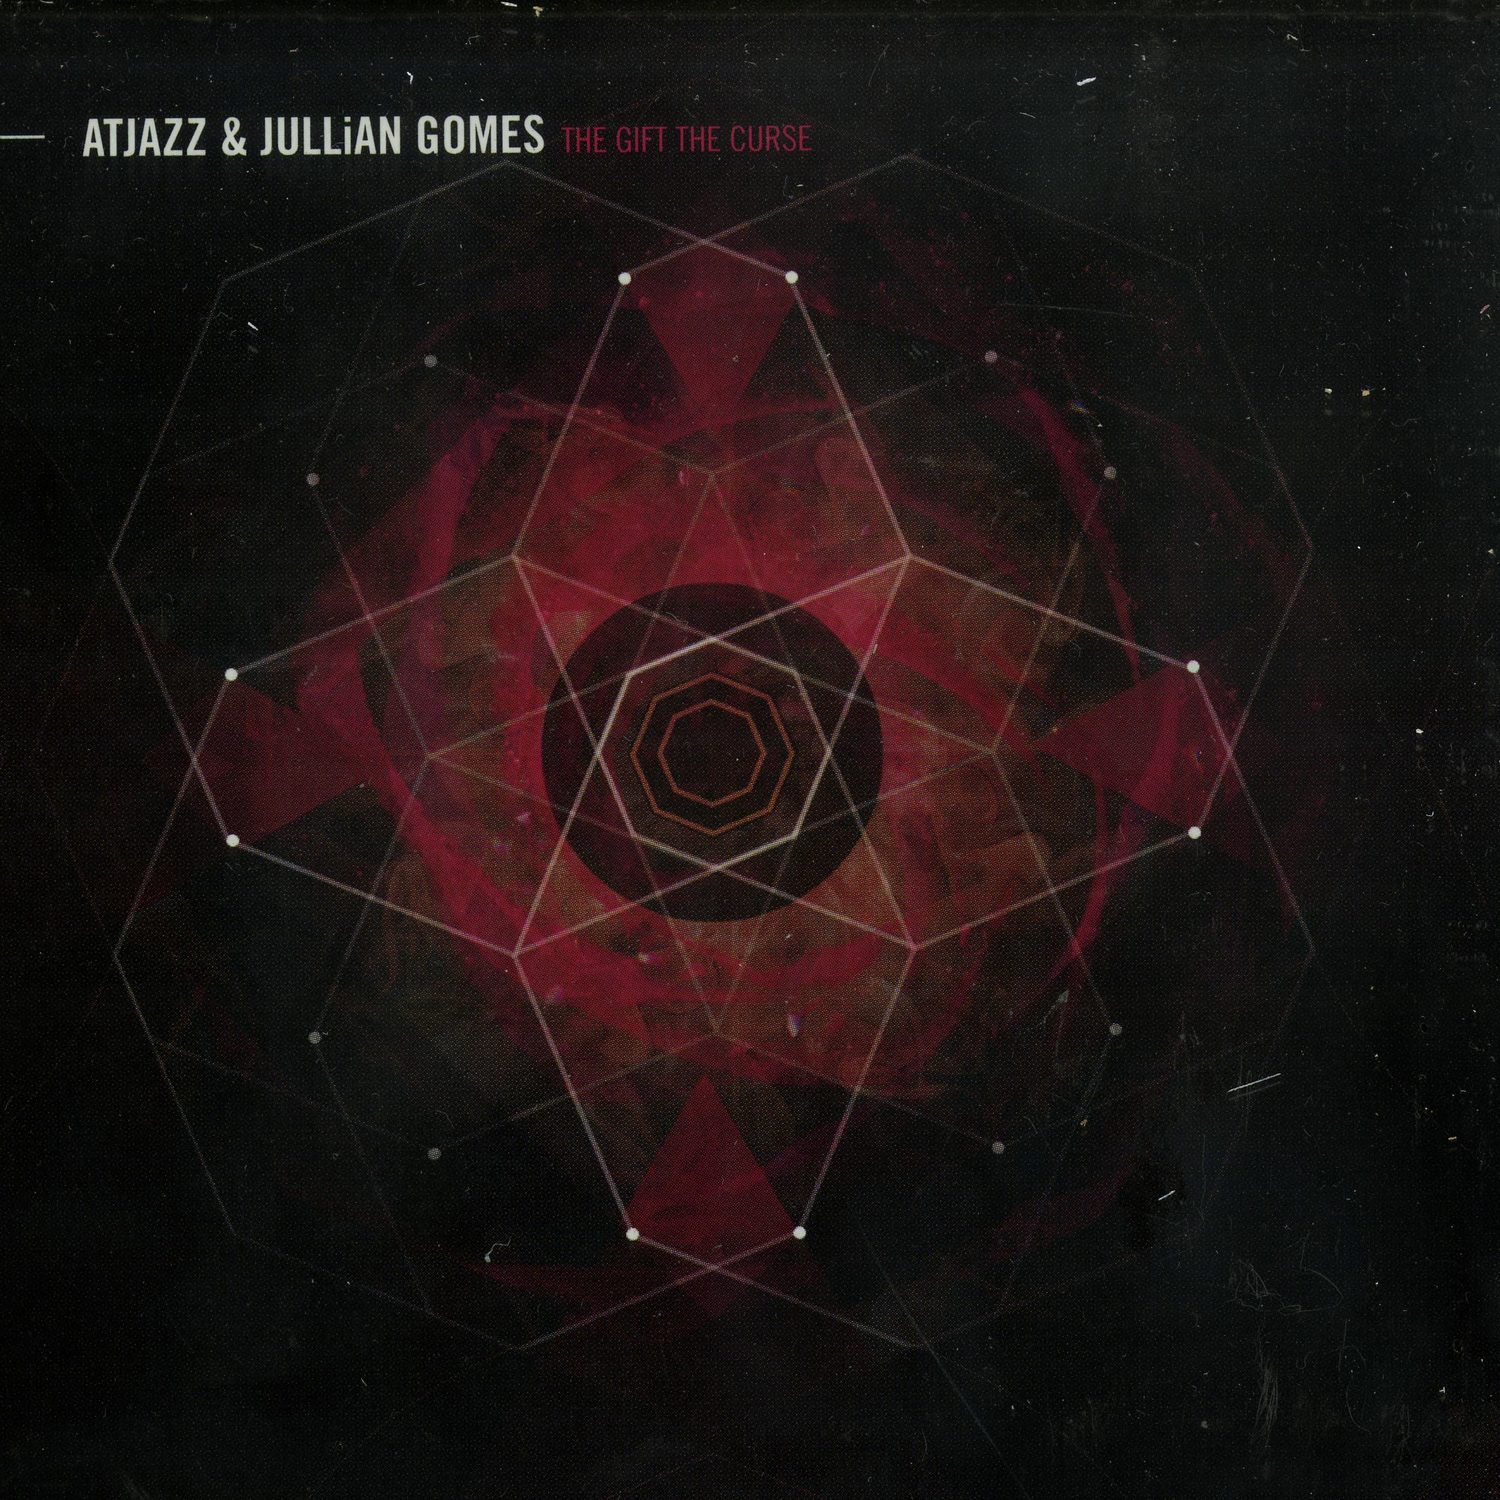 Atjazz & Jullian Gomes - THE GIFT THE CURSE 